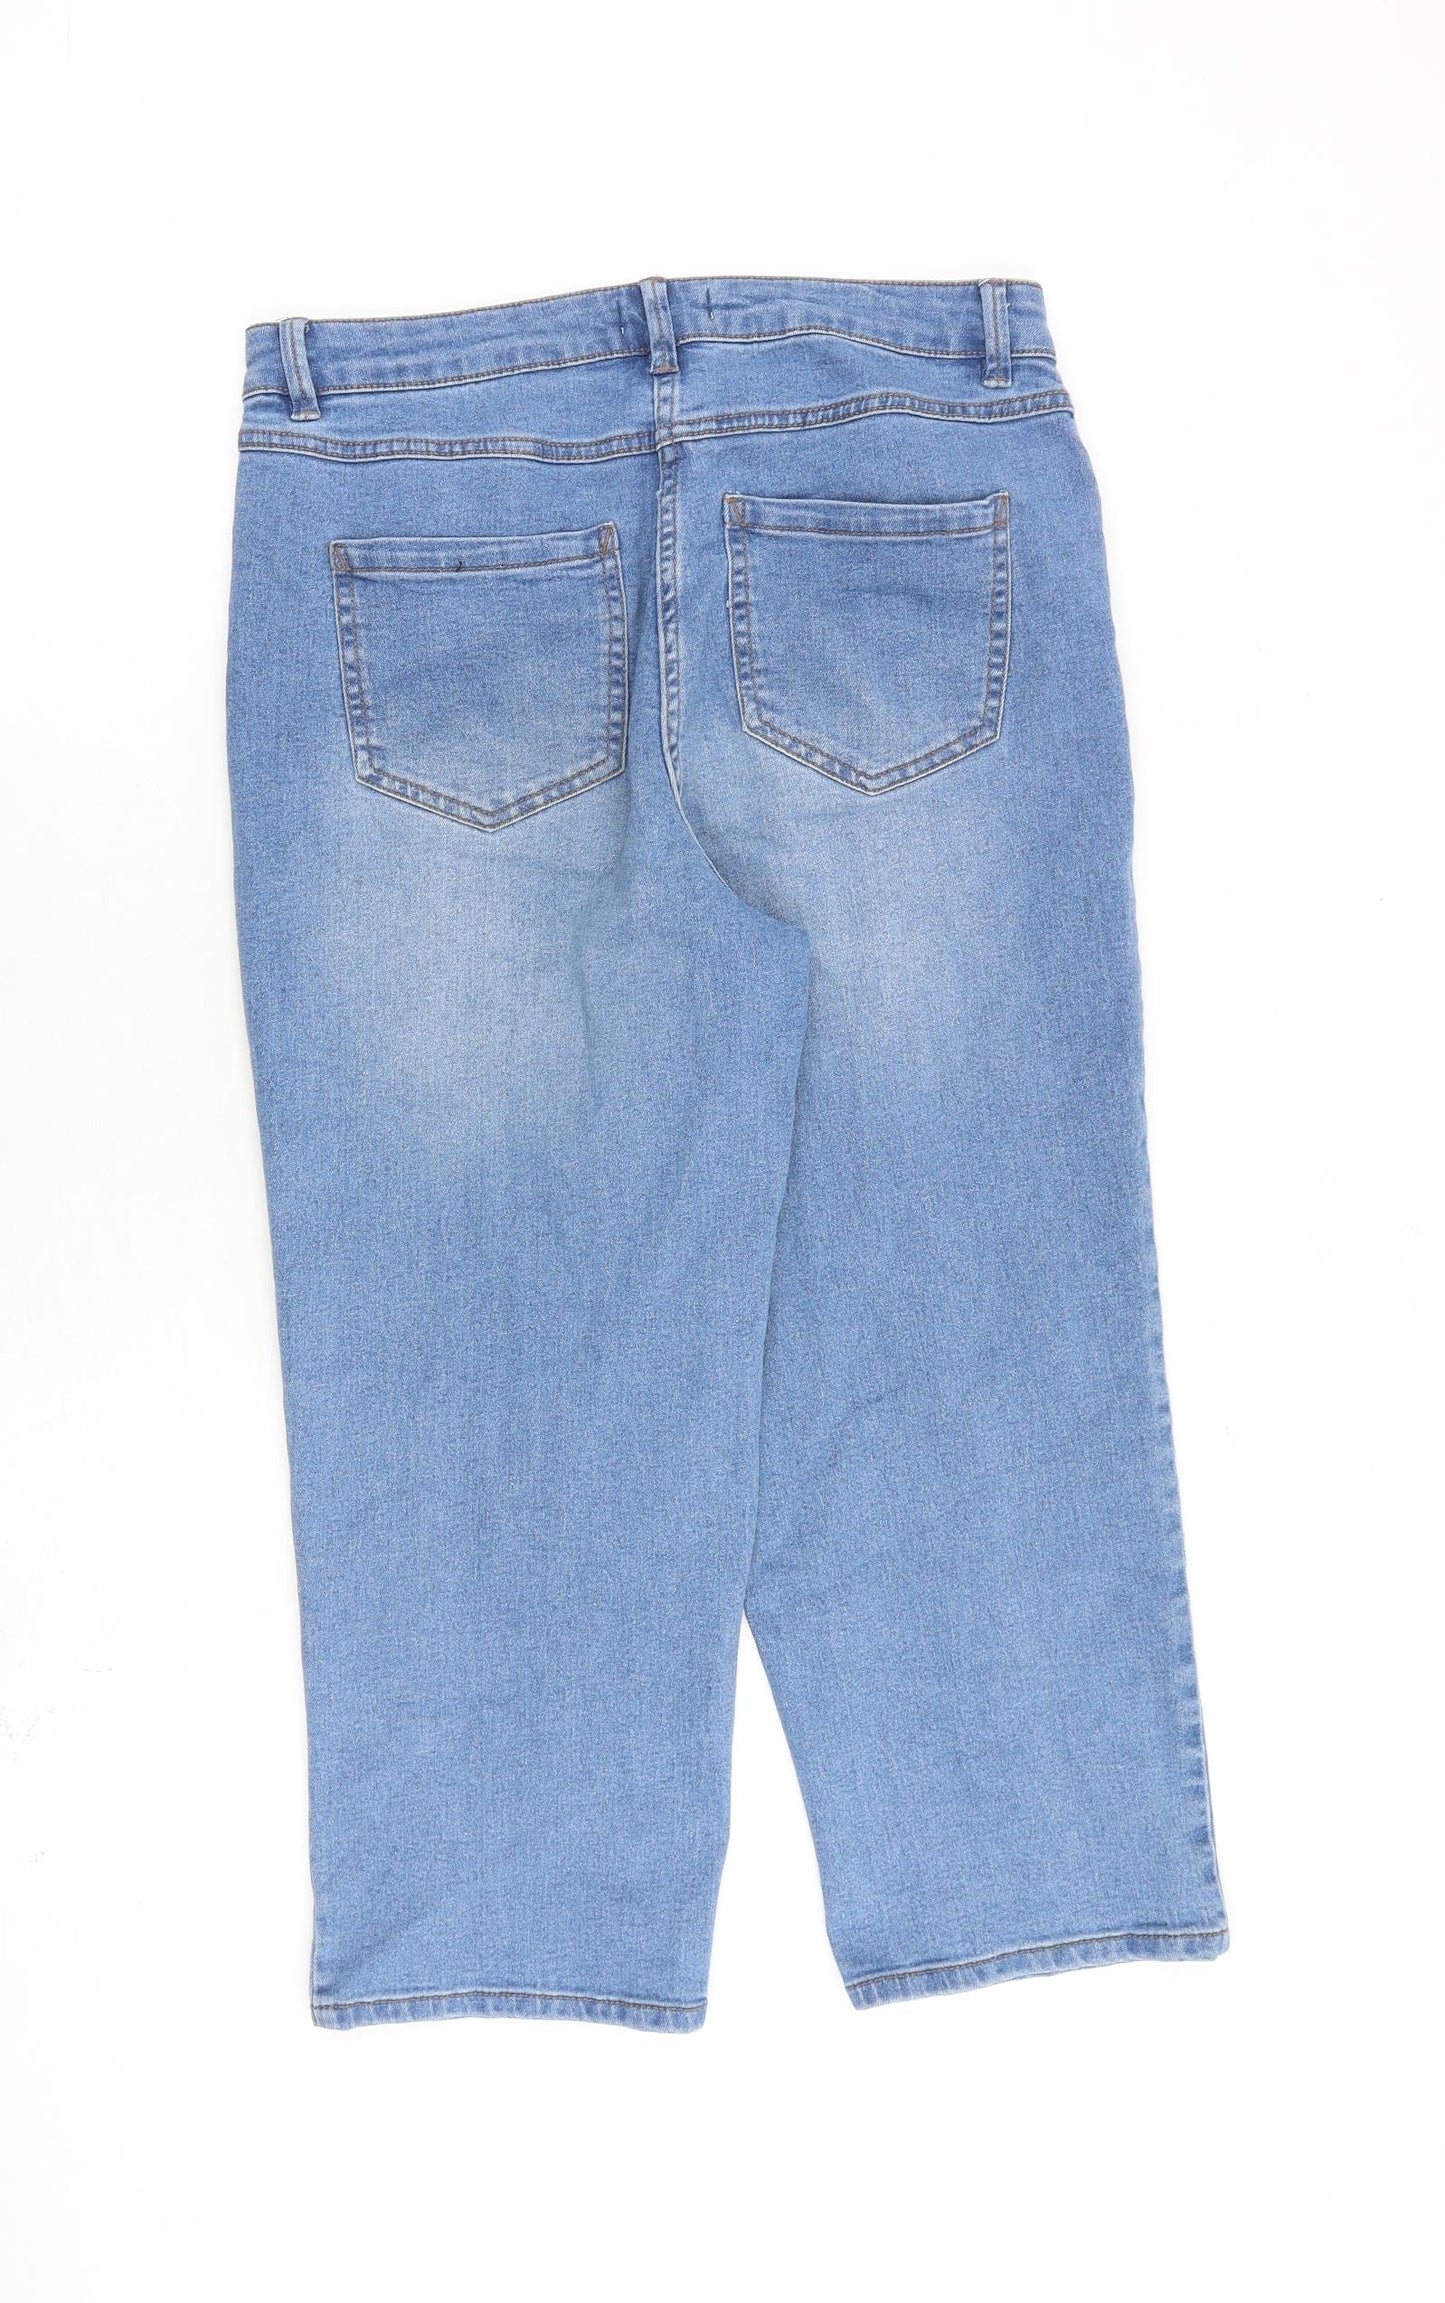 Papaya Womens Blue Cotton Straight Jeans Size 12 L22 in Regular Zip